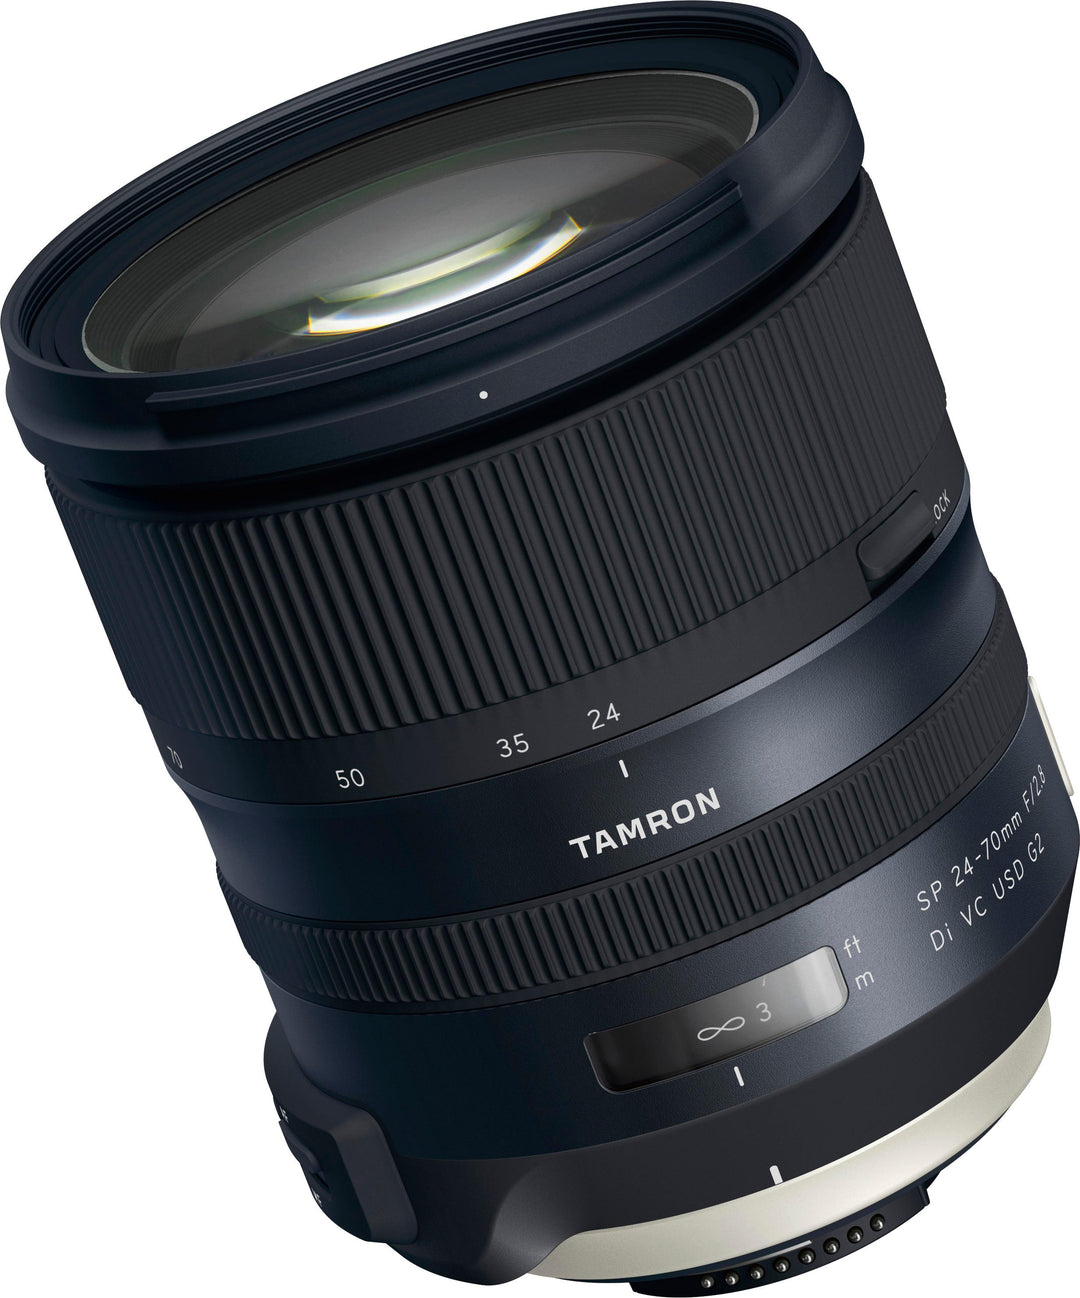 Tamron - SP 24-70mm F/2.8 Di VC USD G2 Zoom Lens for Nikon DSLR cameras - black_1